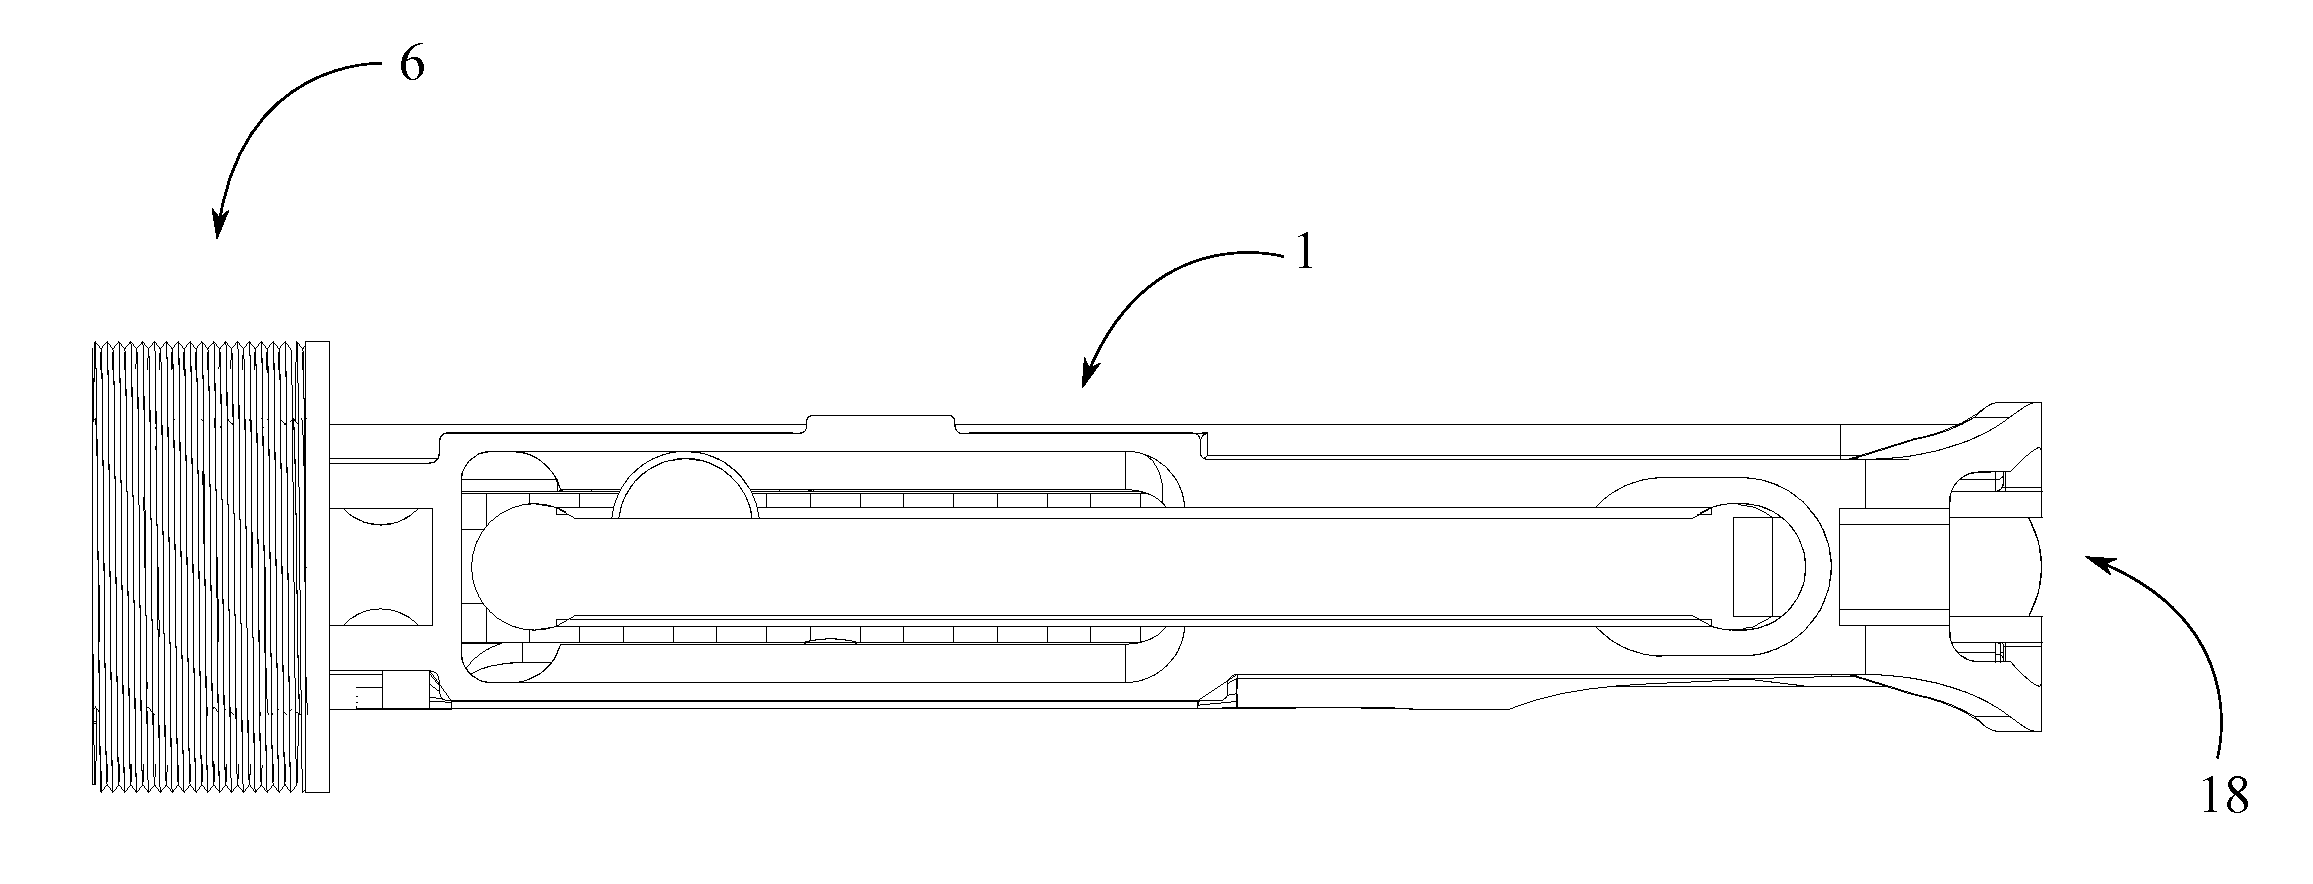 Redesigned AR-15 Upper Receiver